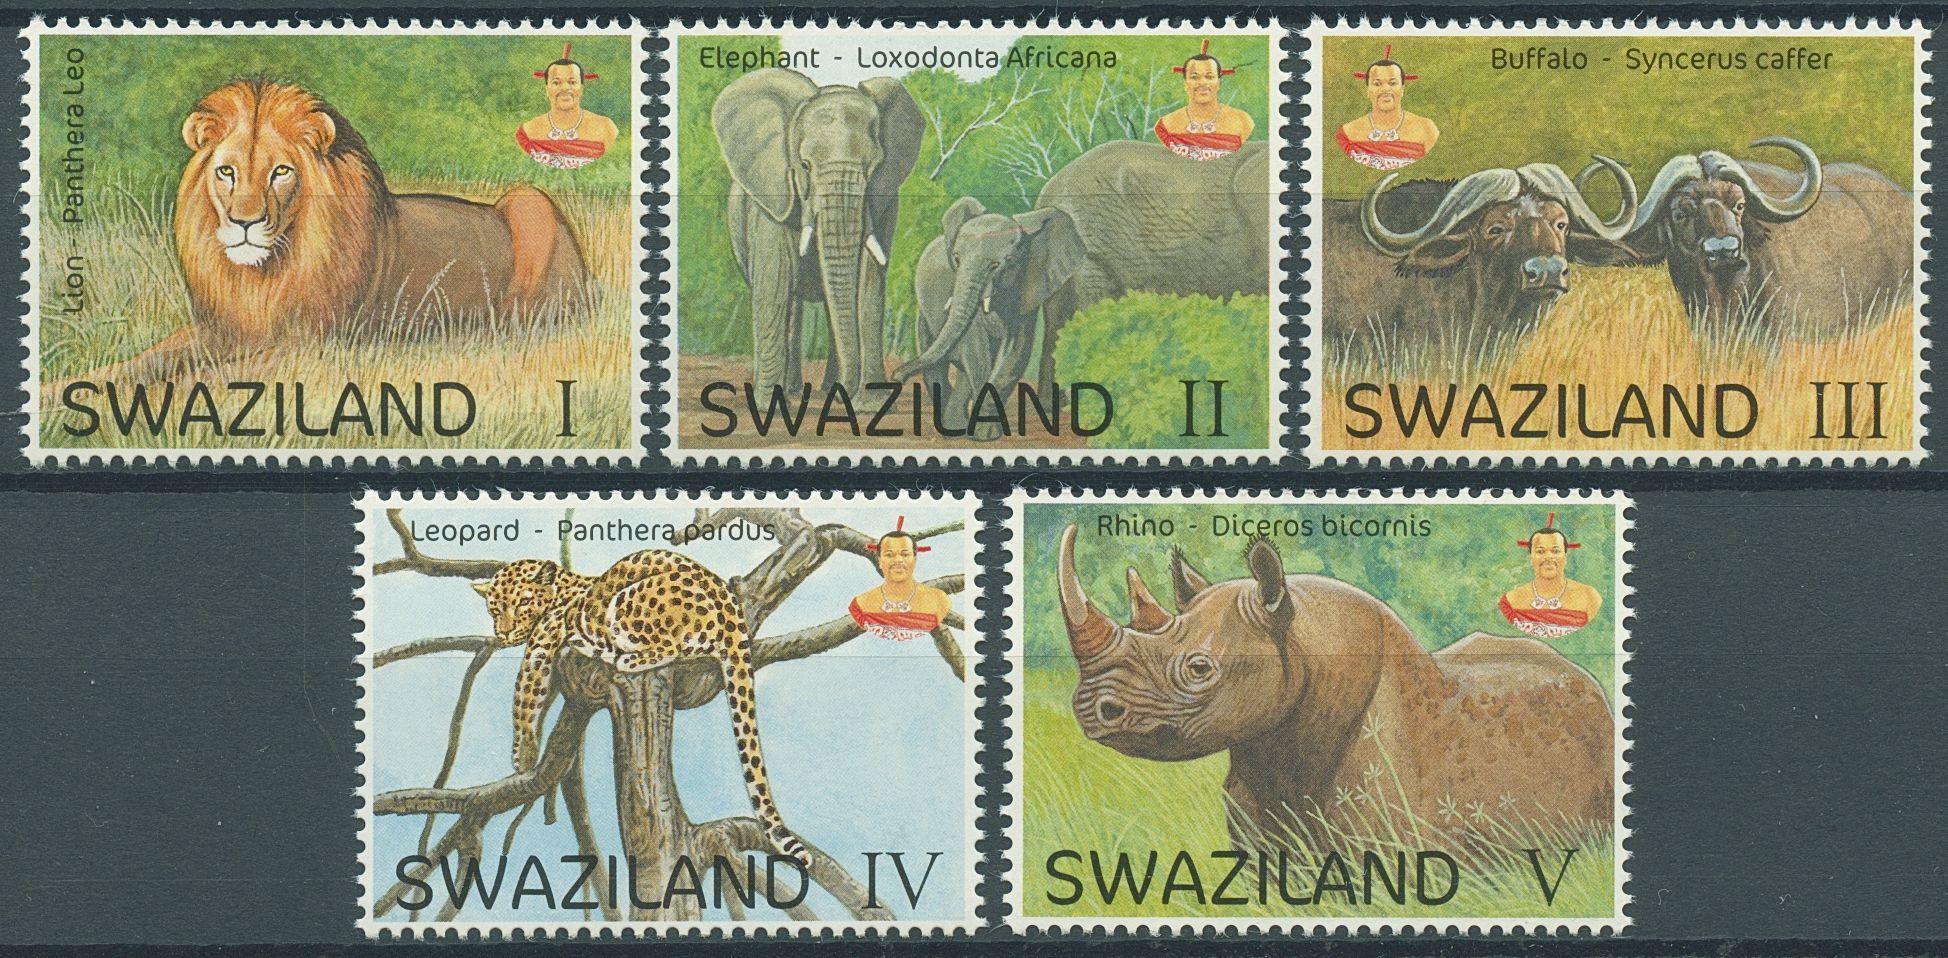 Swaziland 2016 MNH Wild Animals Stamps Big 5 Lions Elephants Rhinos Leopards 5v Set